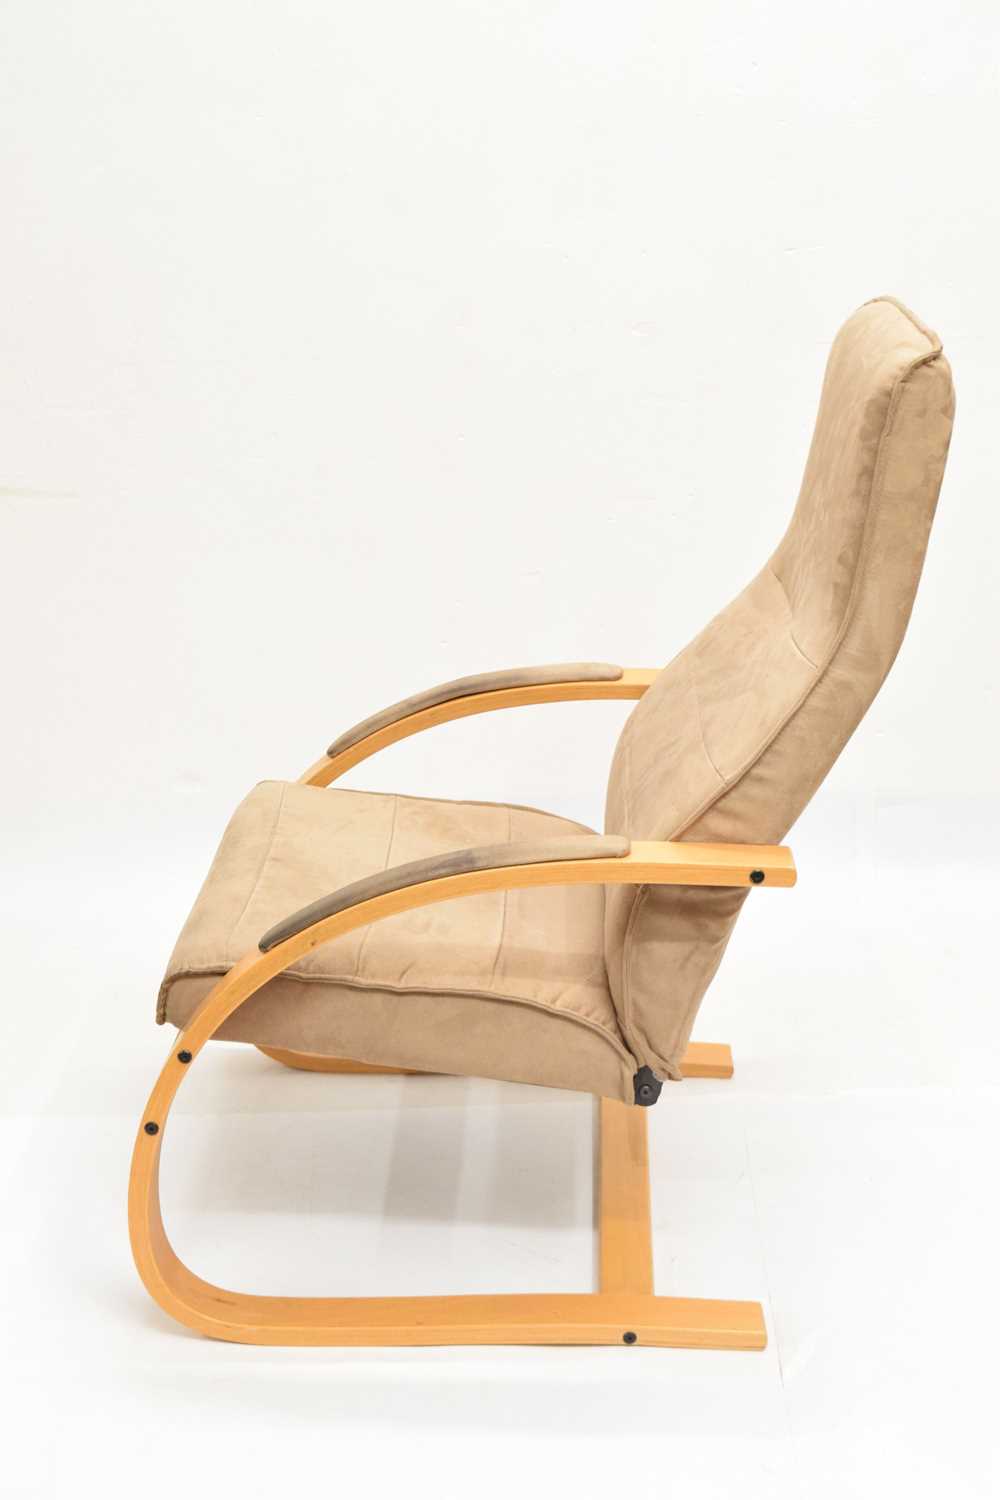 Contemporary Verikon (Denmark) armchair - Image 5 of 9